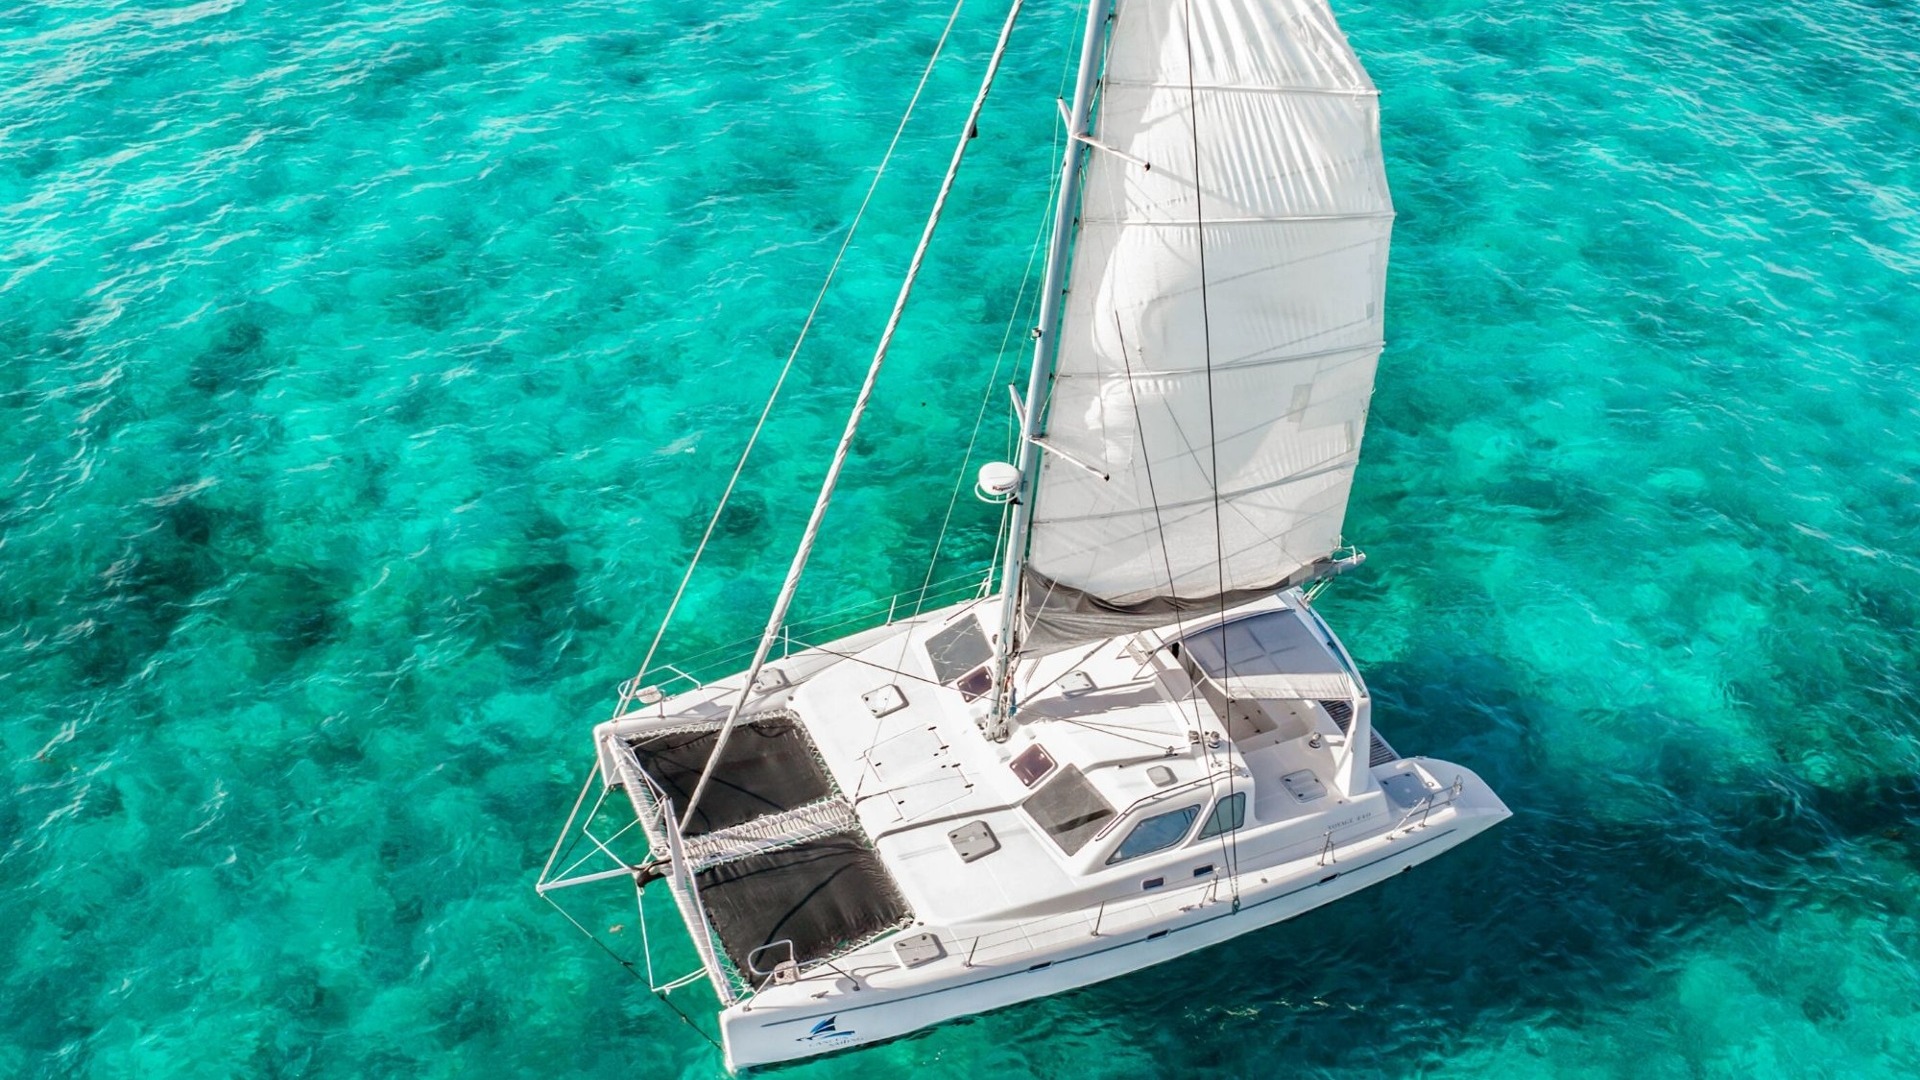 LowRes - Paradise explorer - Private Isla Mujeres catamaran tour - Cancun Sailing